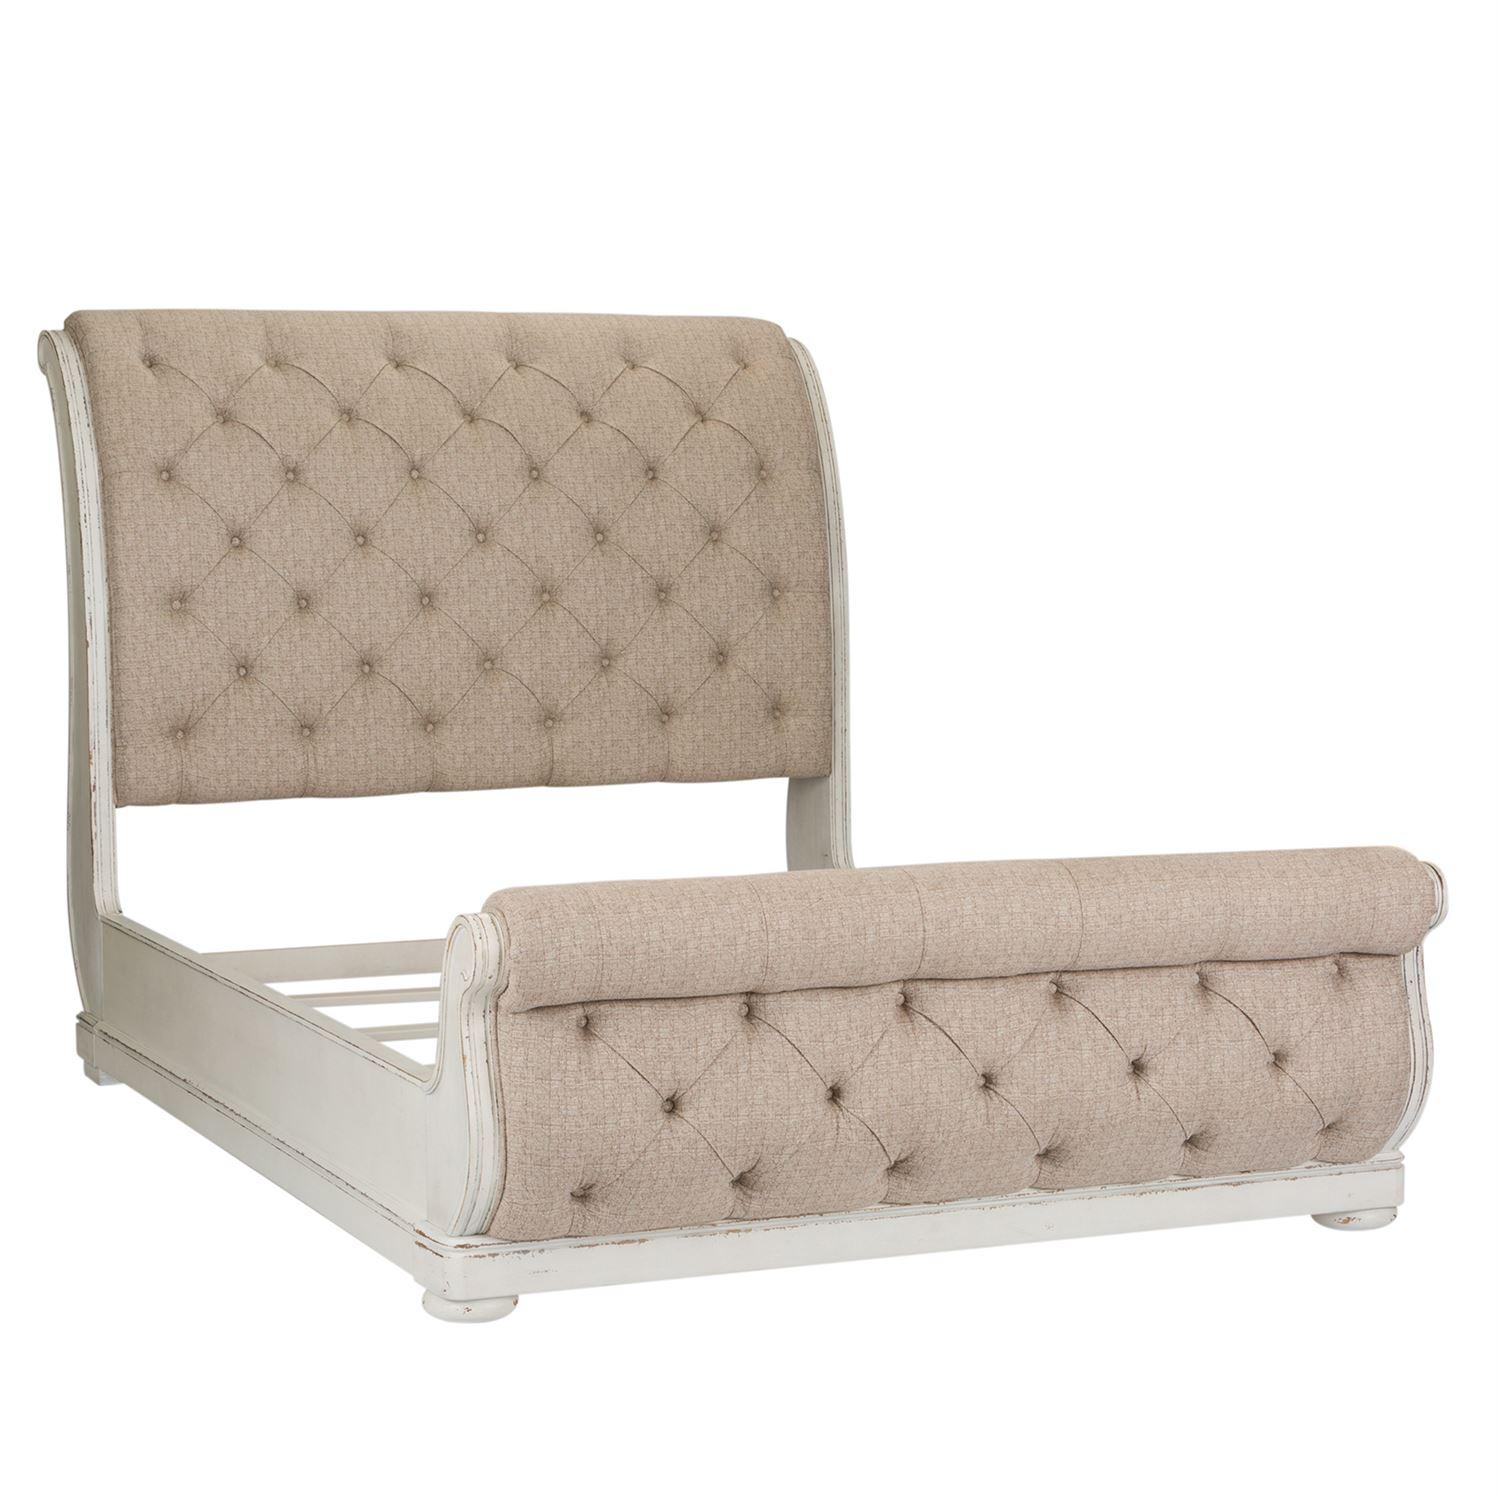 

    
Liberty Furniture Abbey Park 520-BR-KUSL Sleigh Bed White 520-BR-KUSL
